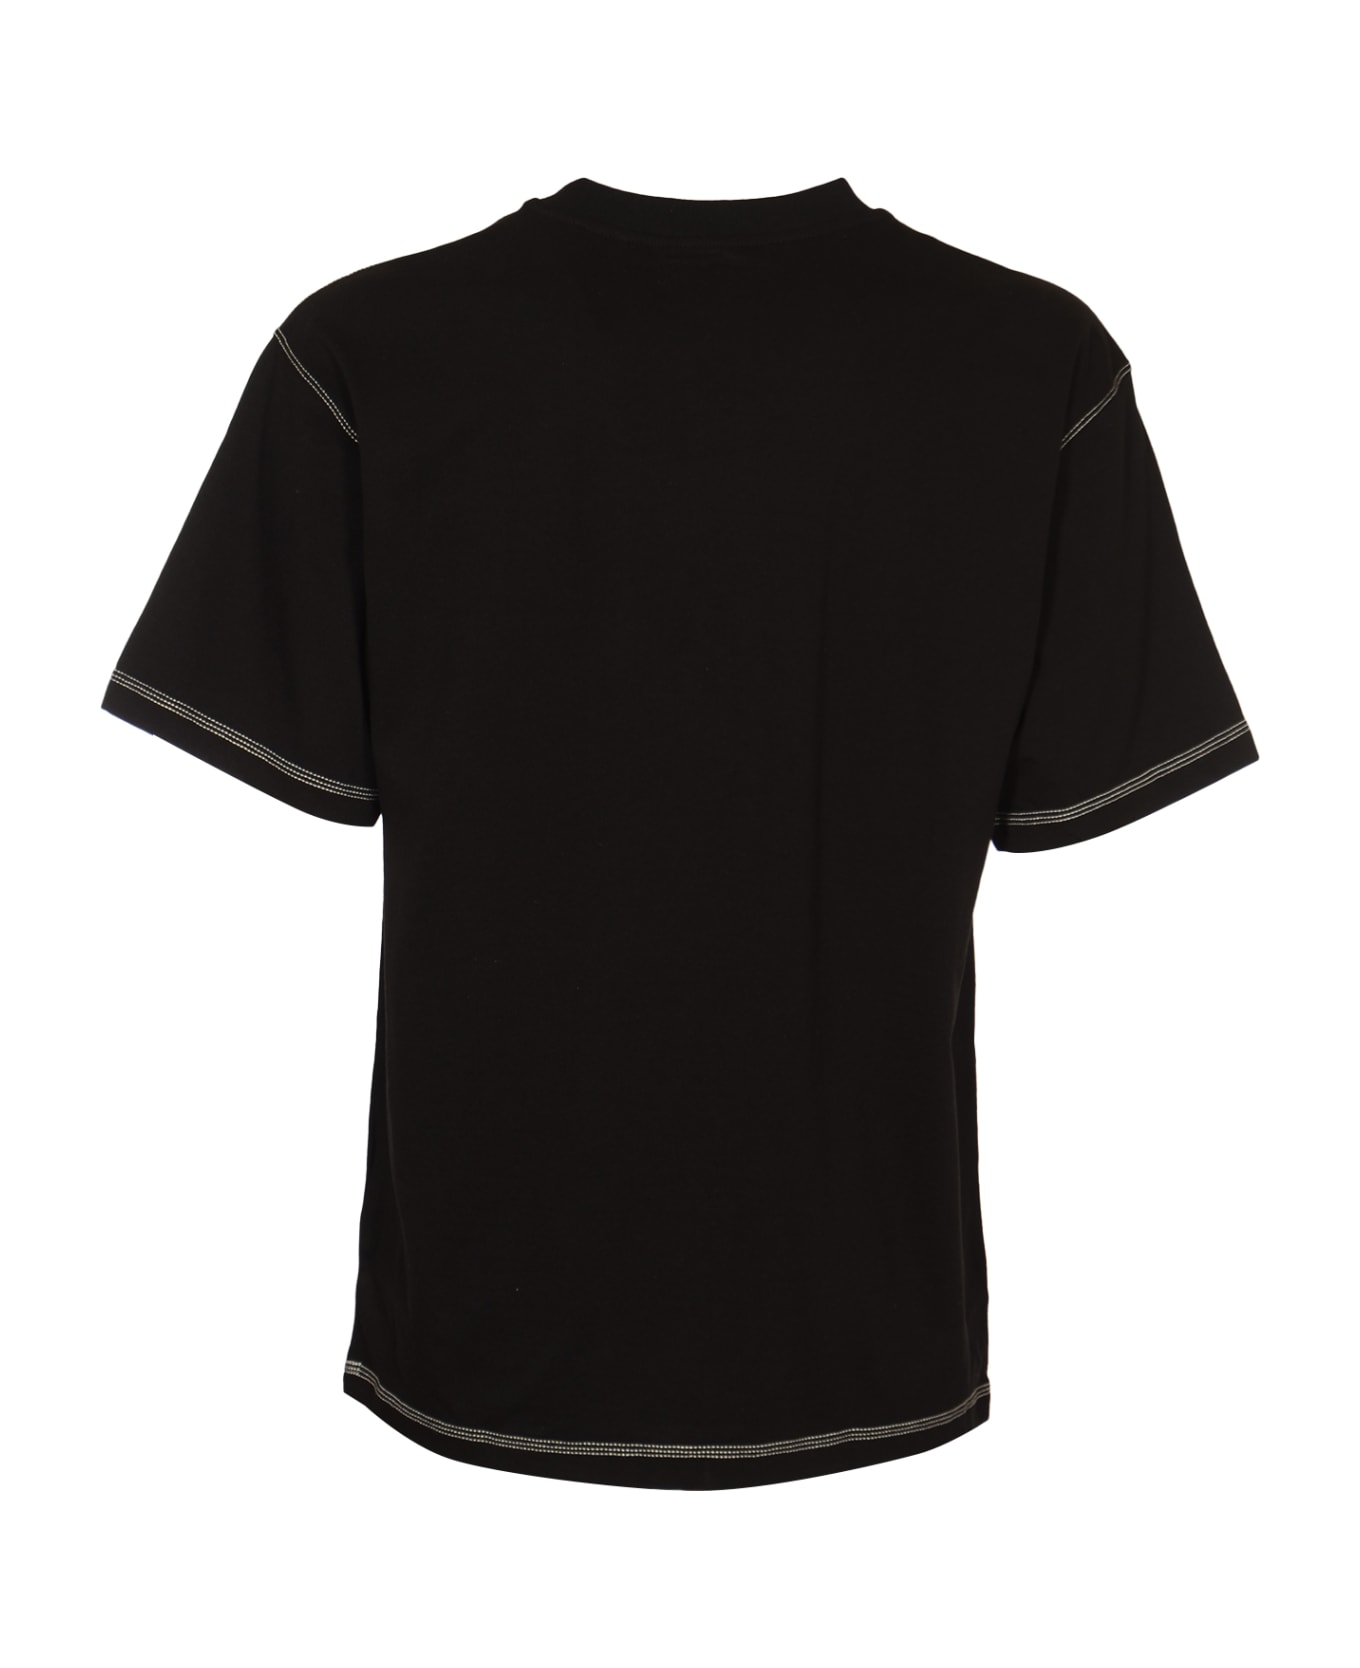 Hugo Boss Nineteen Ninety Three T-shirt - Black